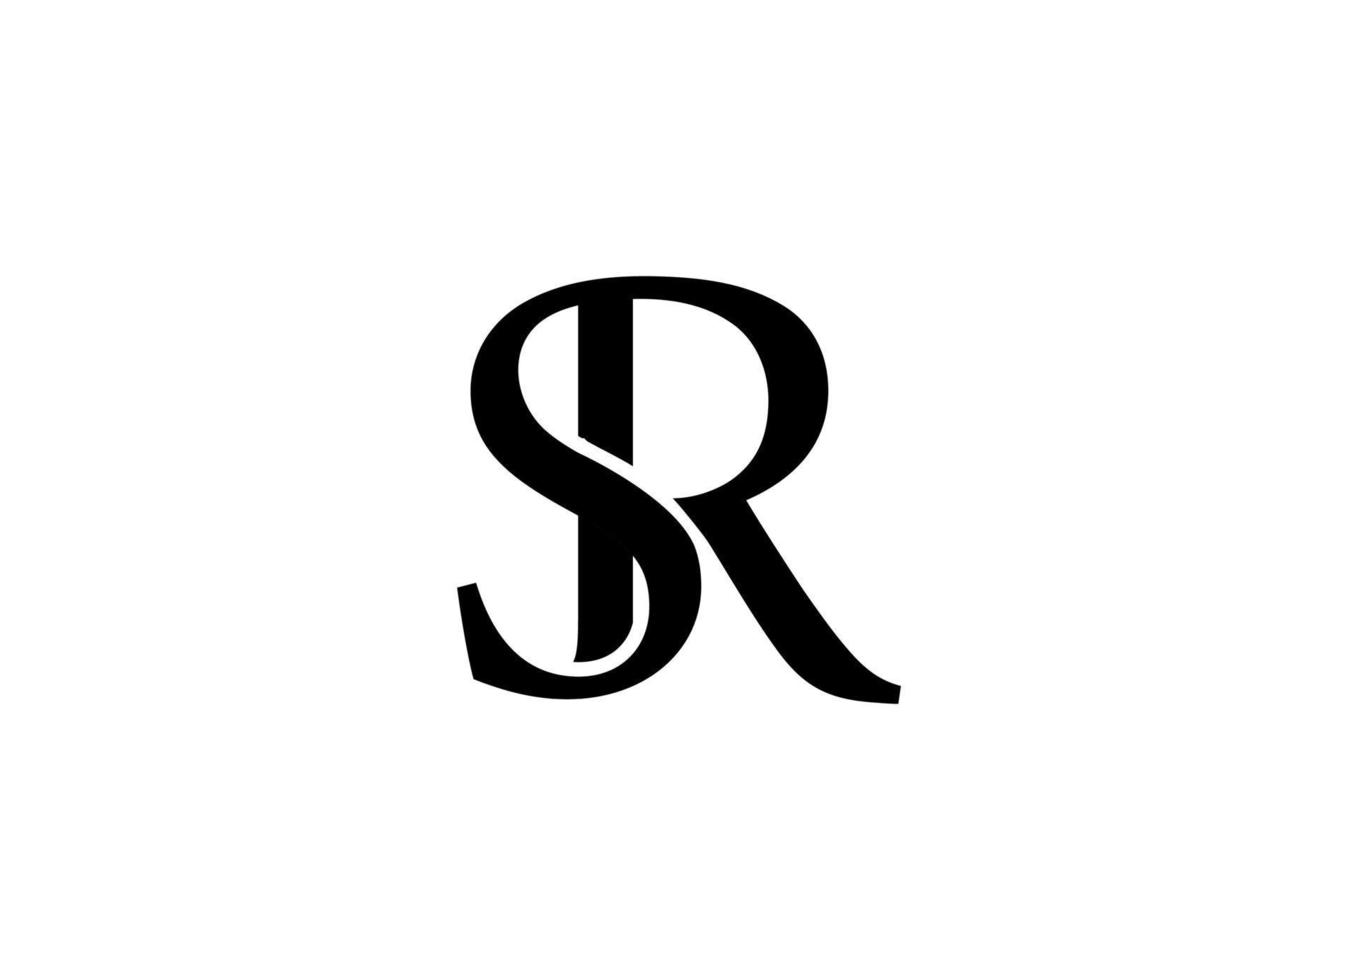 SR logo design free vector file